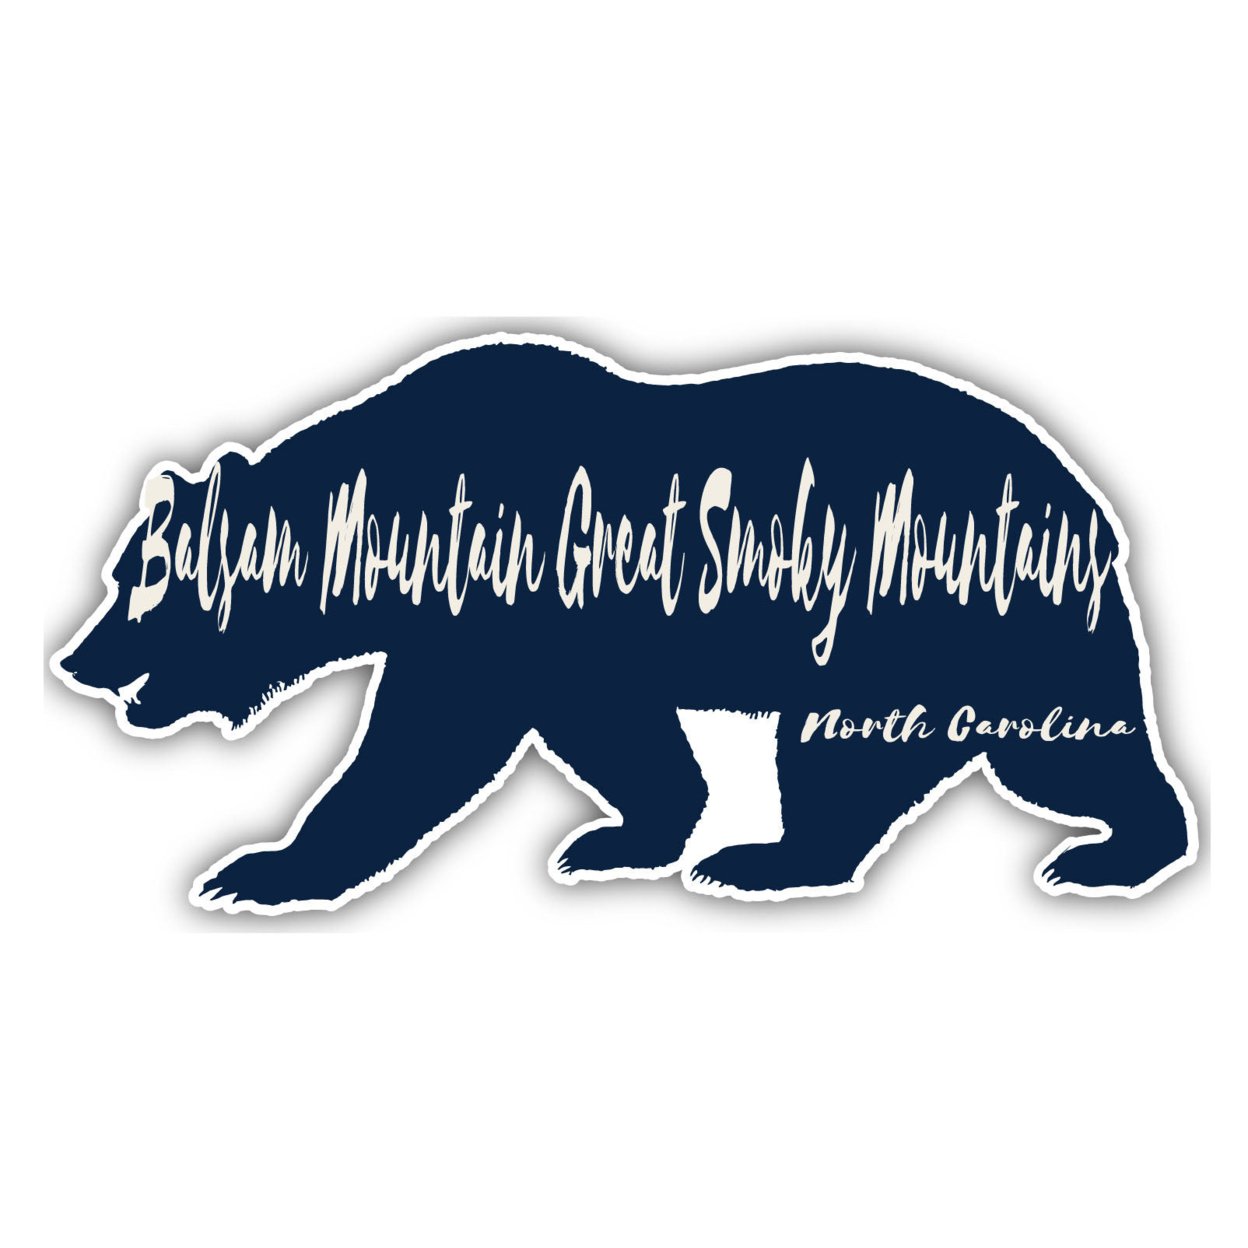 Balsam Mountain Great Smoky Mountains North Carolina Souvenir Decorative Stickers (Choose Theme And Size) - Single Unit, 10-Inch, Bear